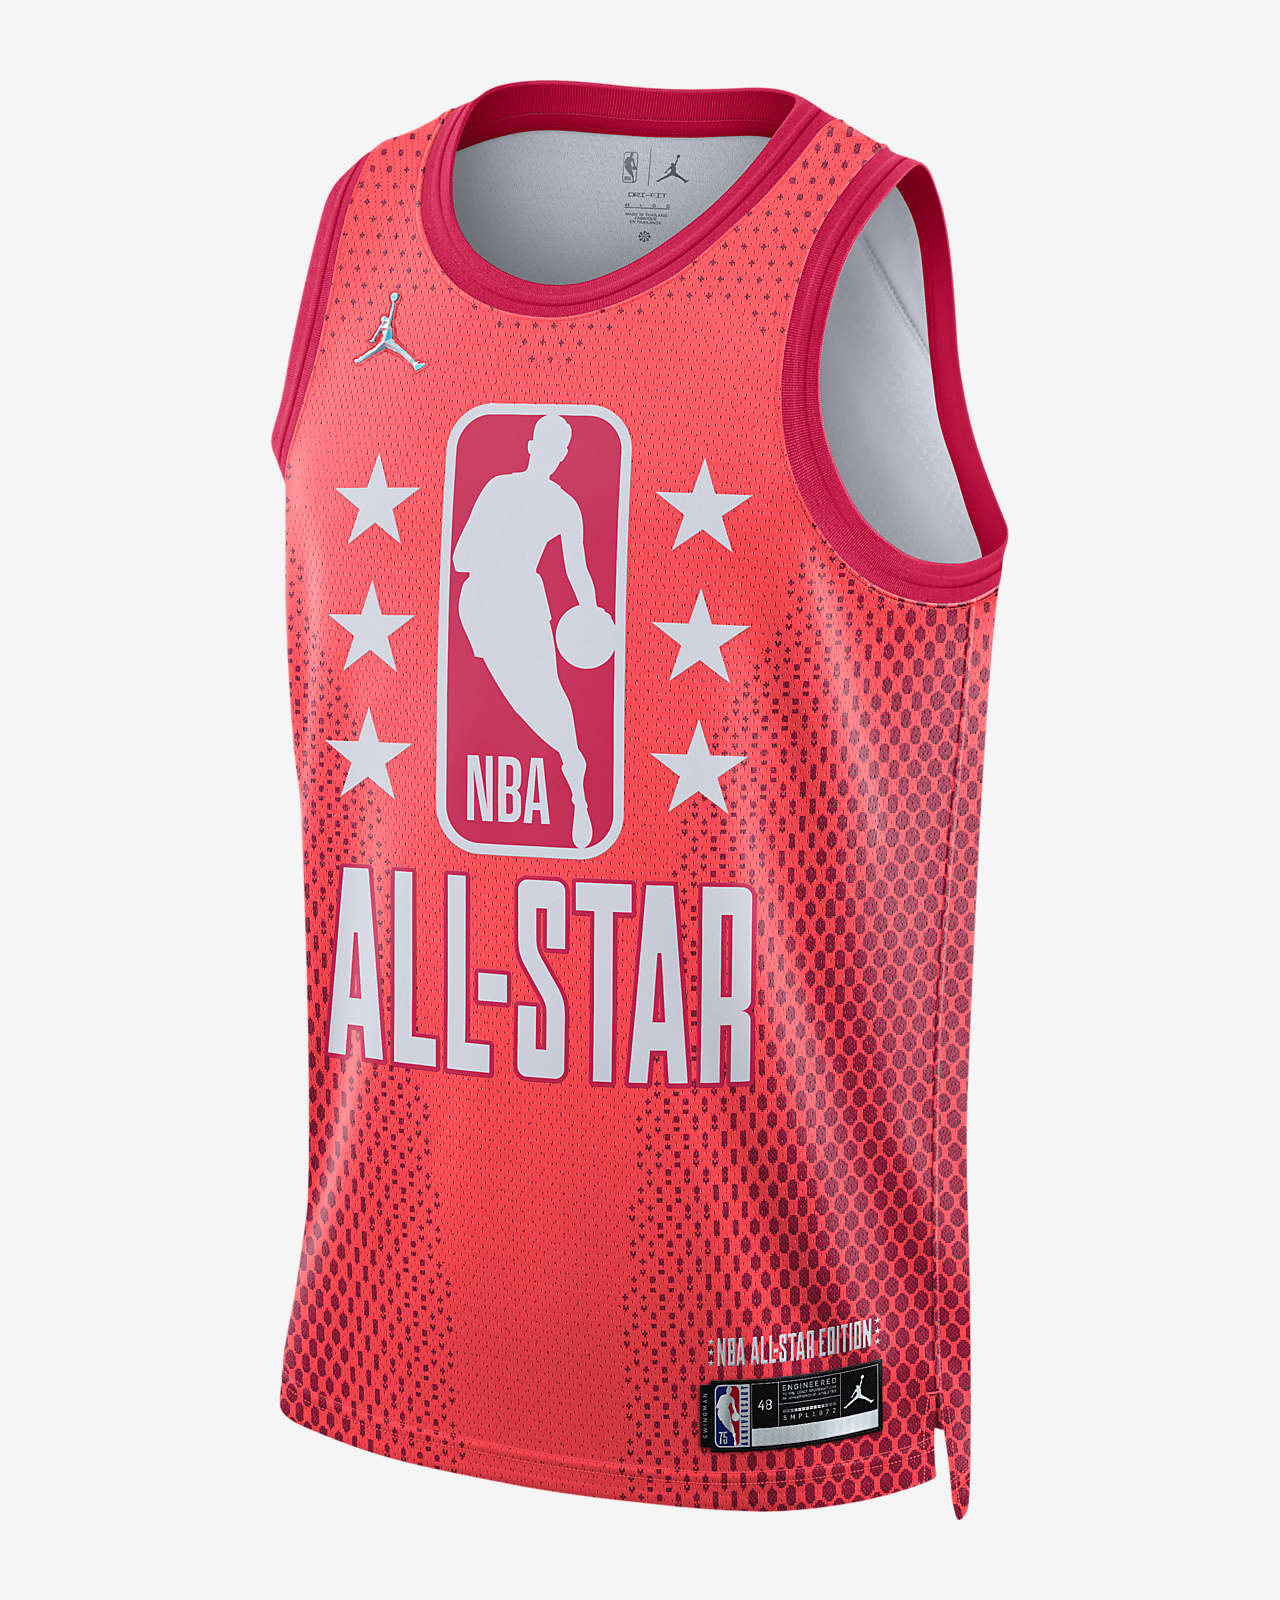 All-Star Edition Jordan Dri-FIT NBA Swingman Jersey